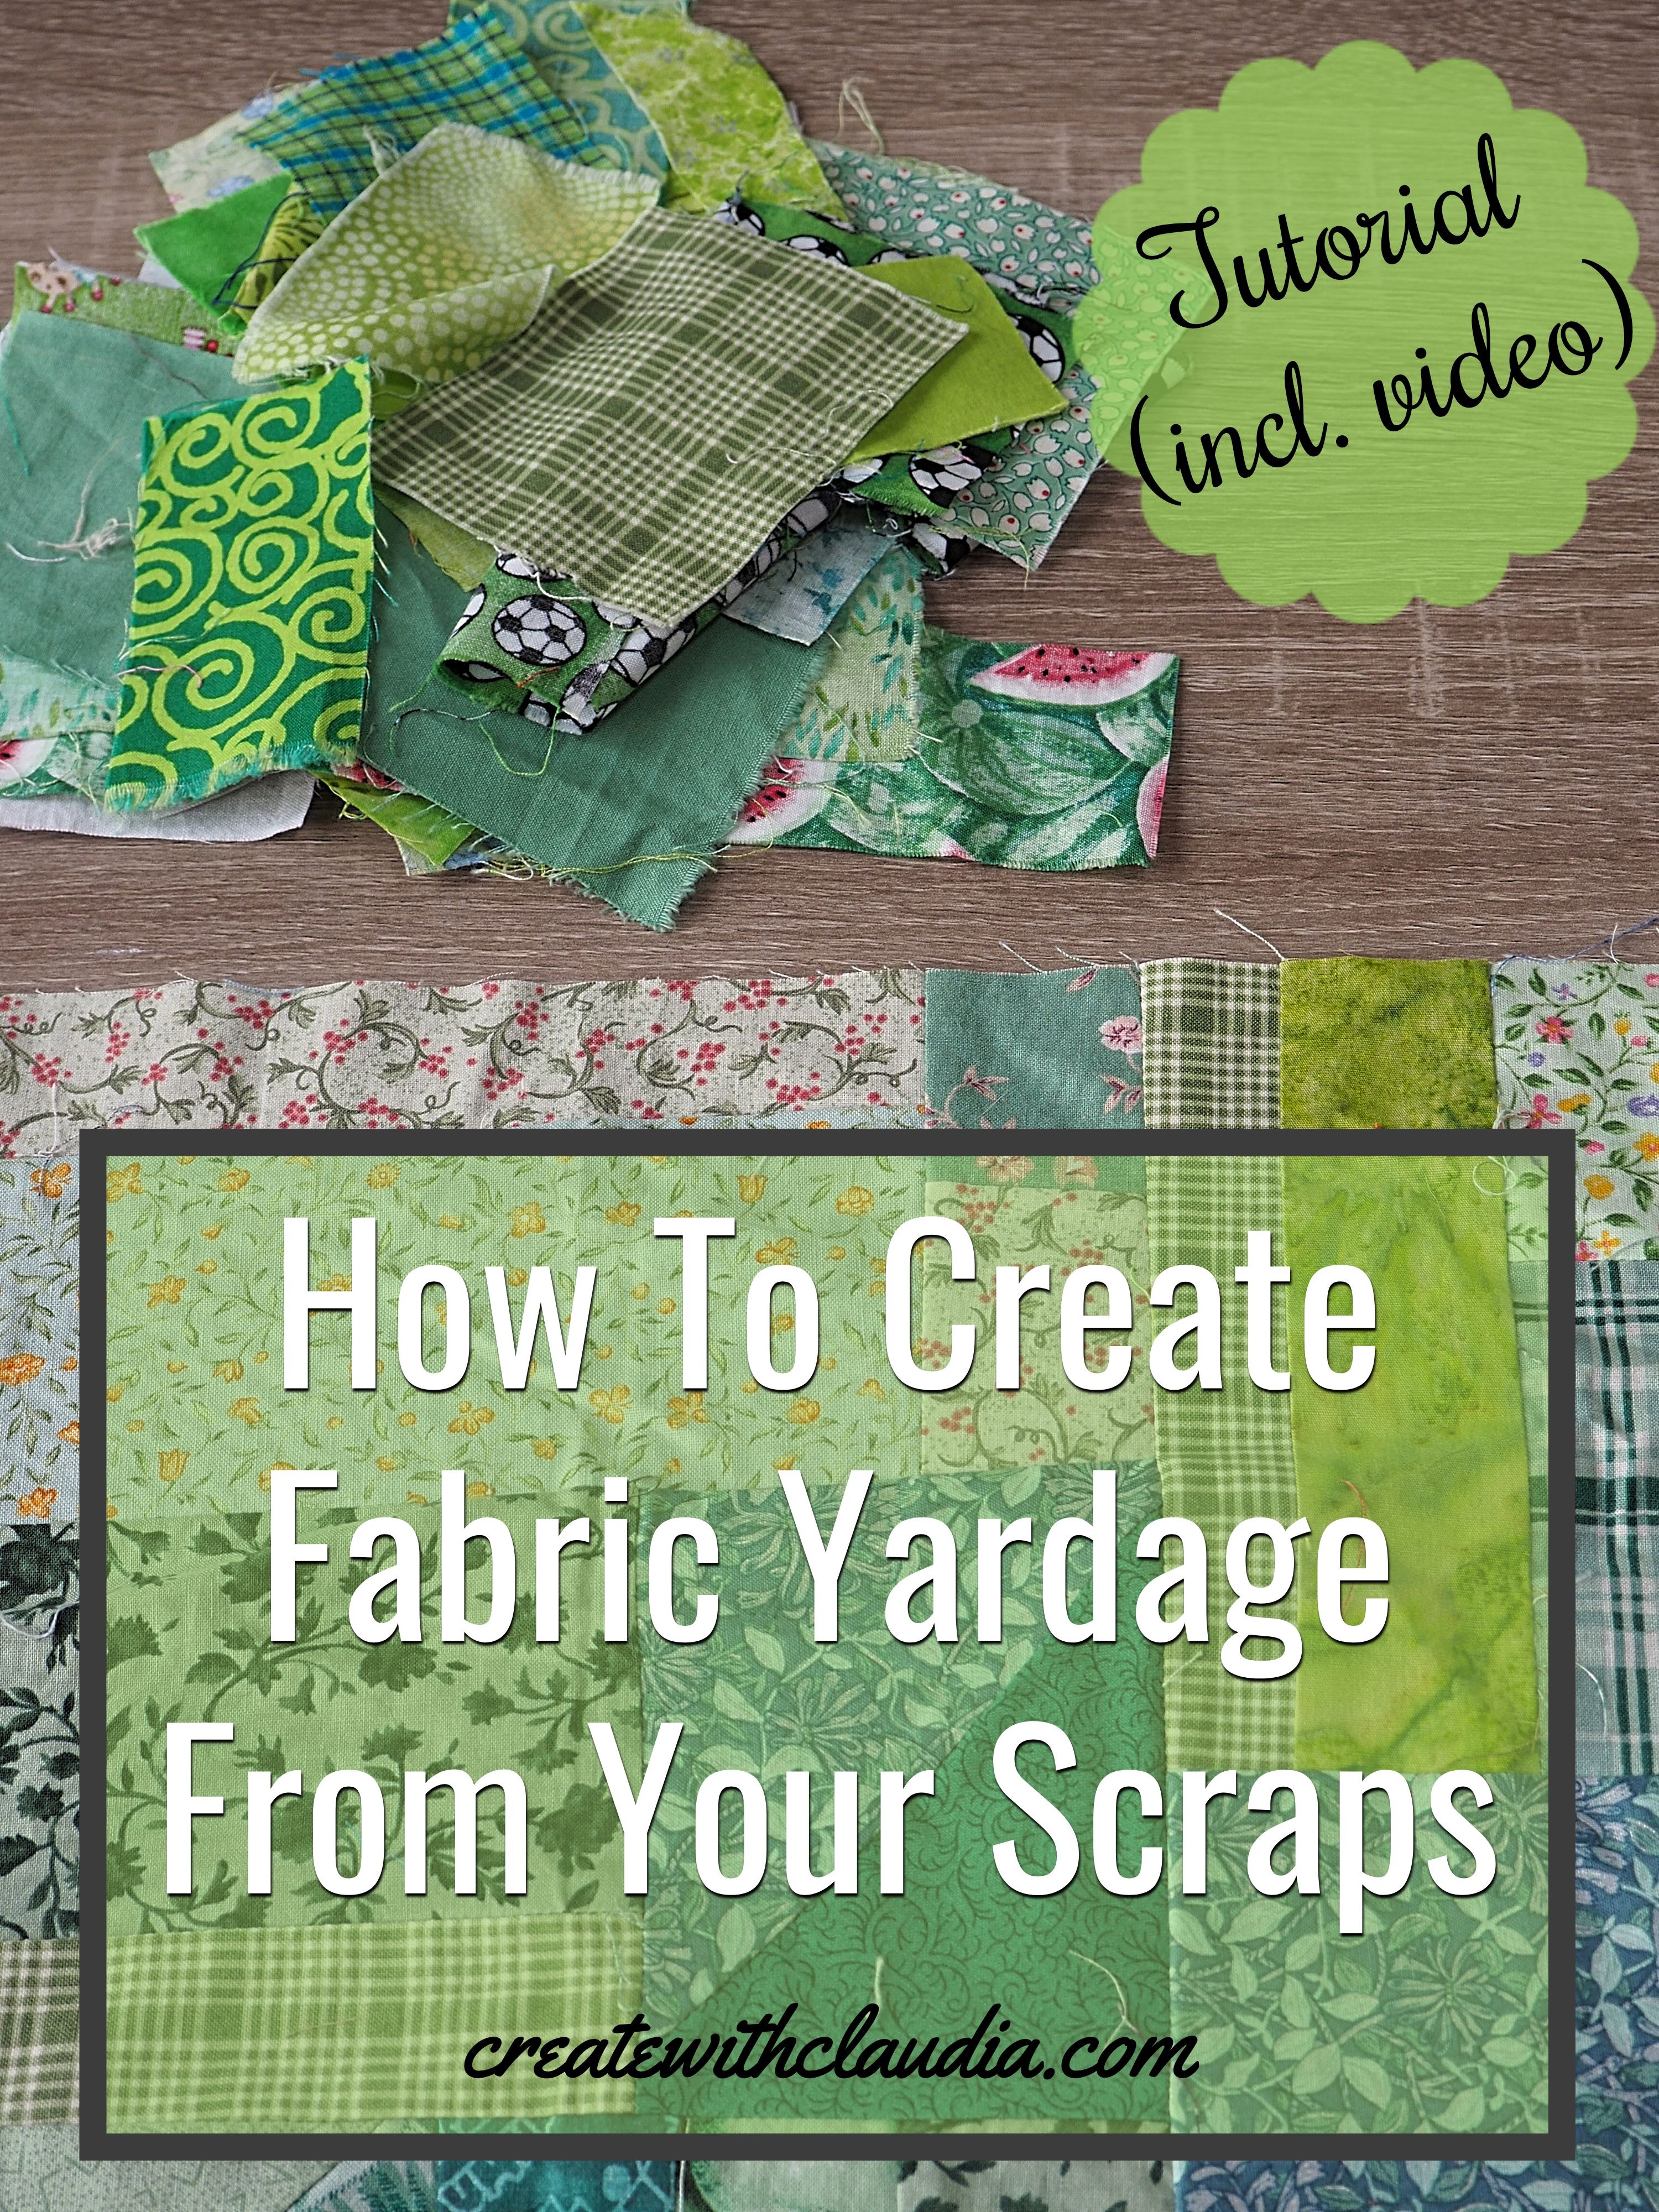 Don't Throw Away Your Scrap Fabric